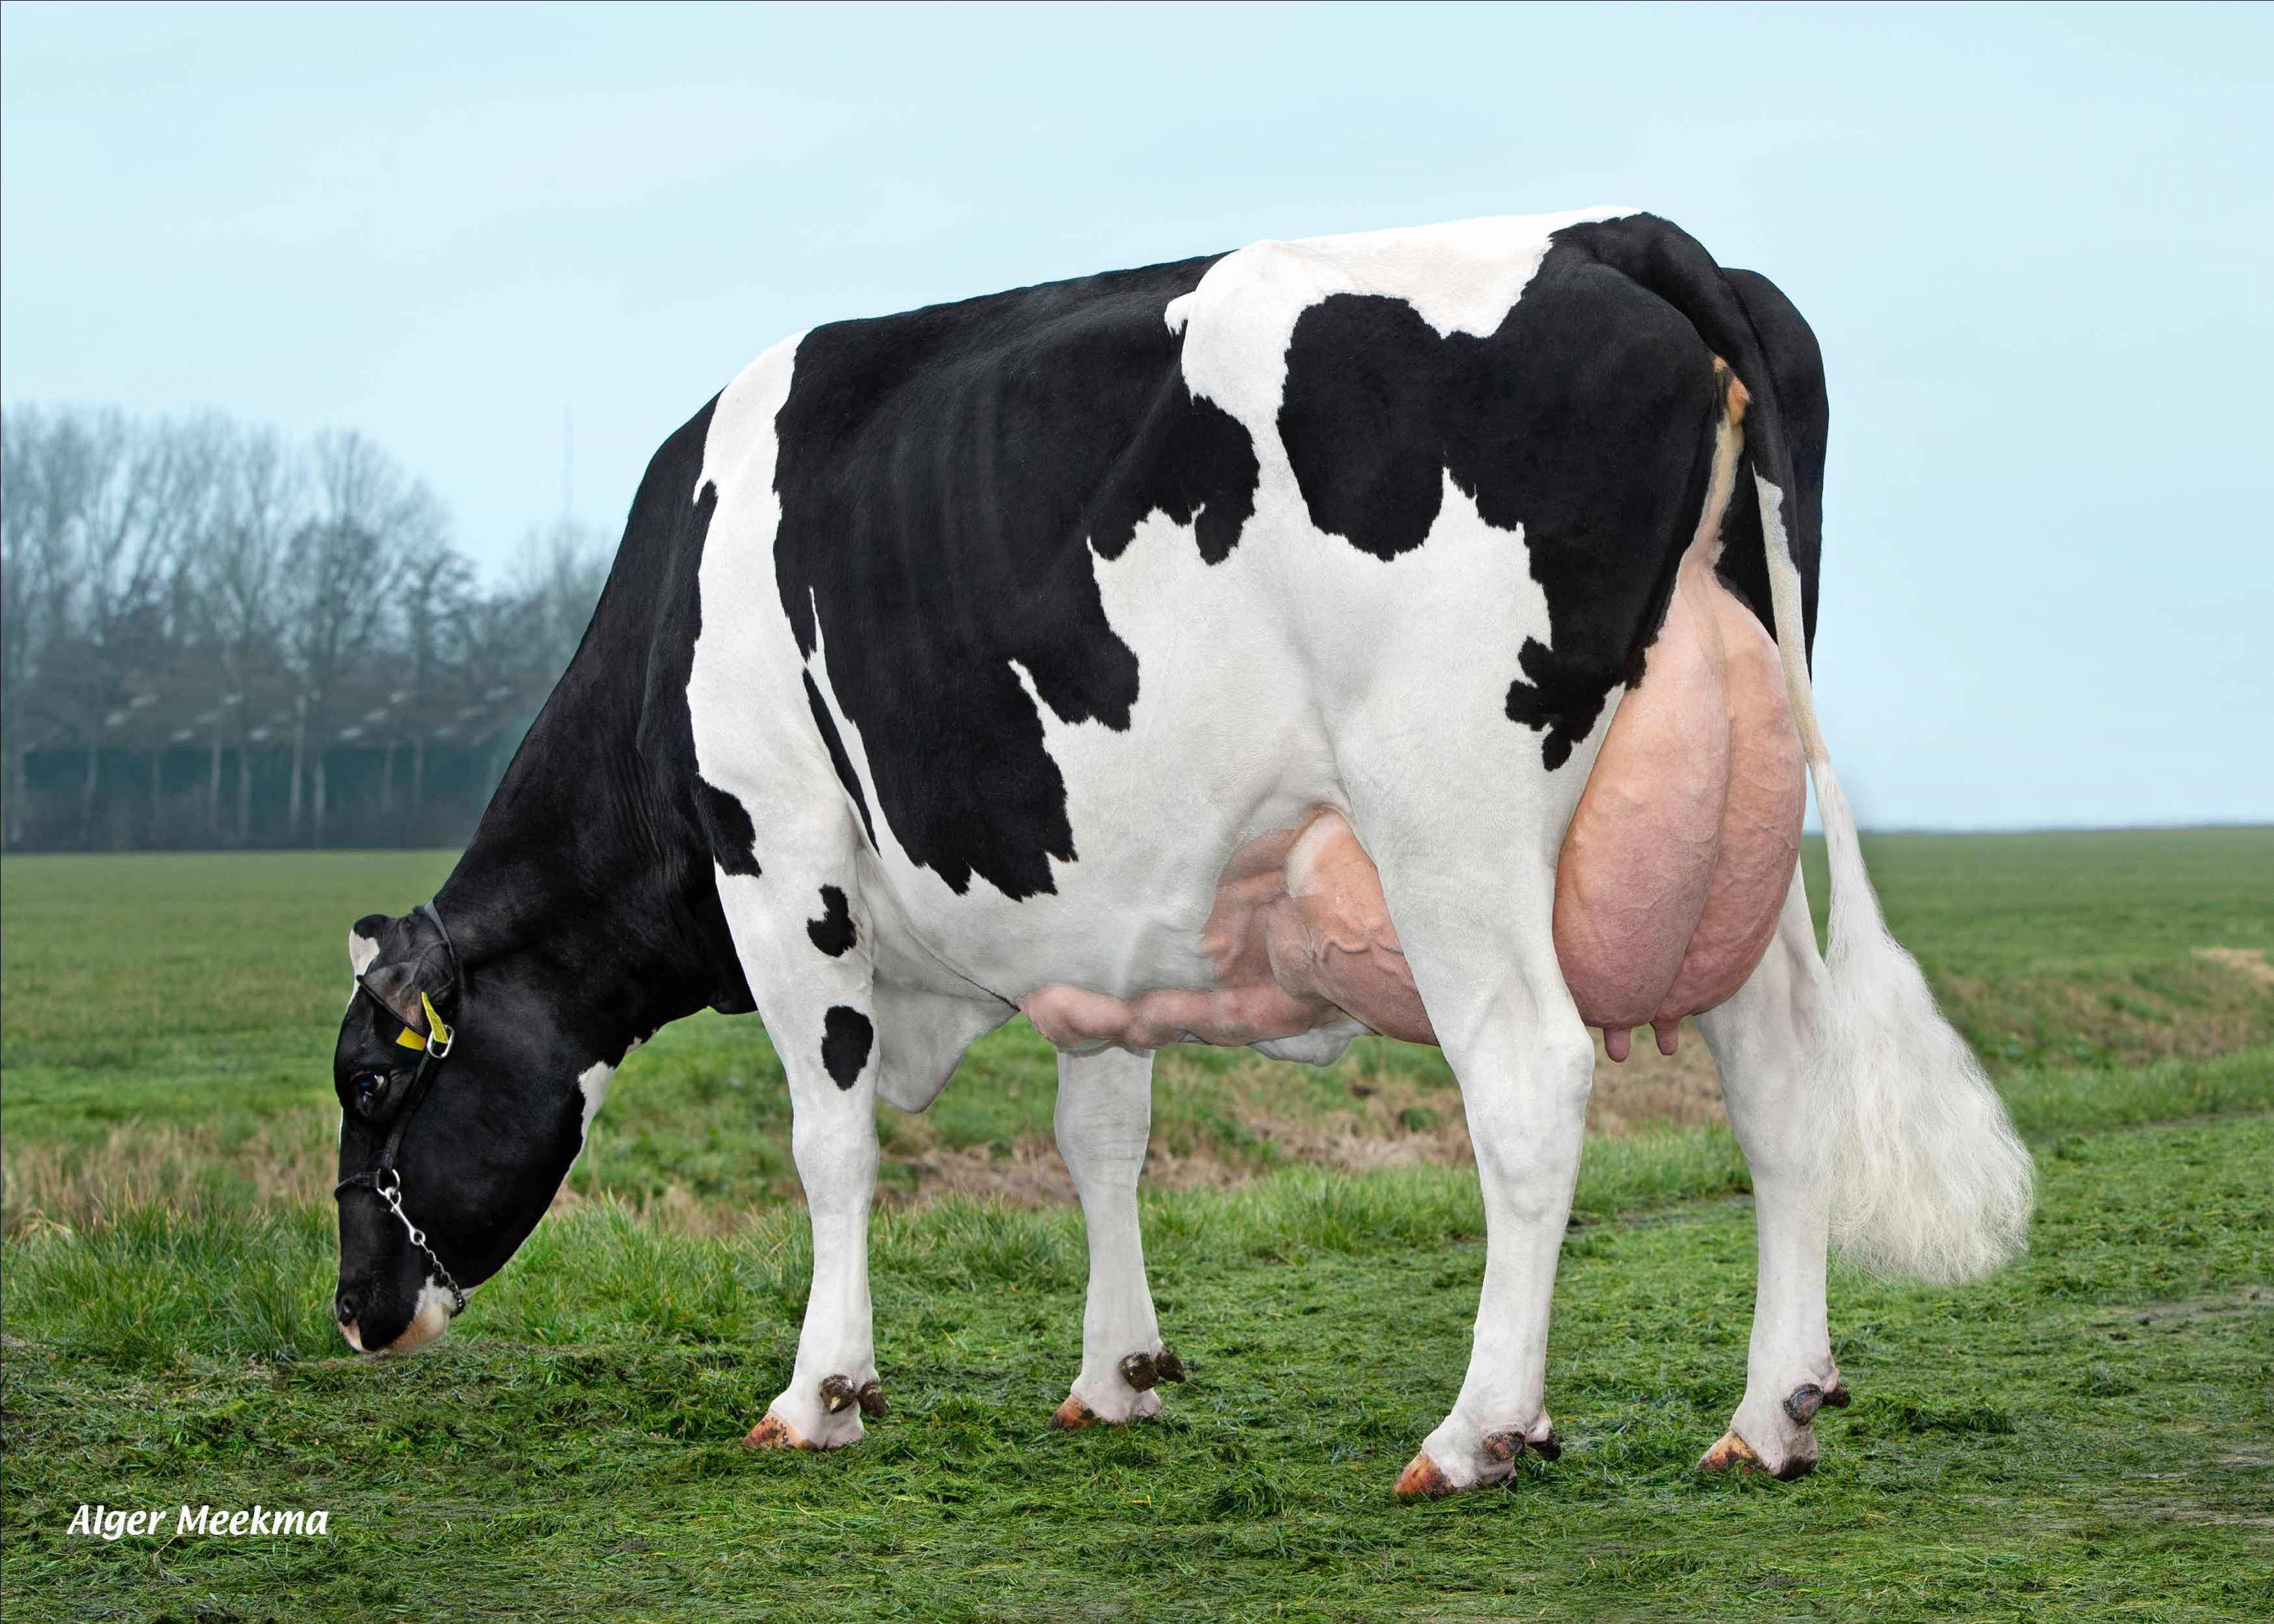 Delta Thilda (granddam of Tornado, third lactation) owner: Dairy farm van Berkum, Elahuizen